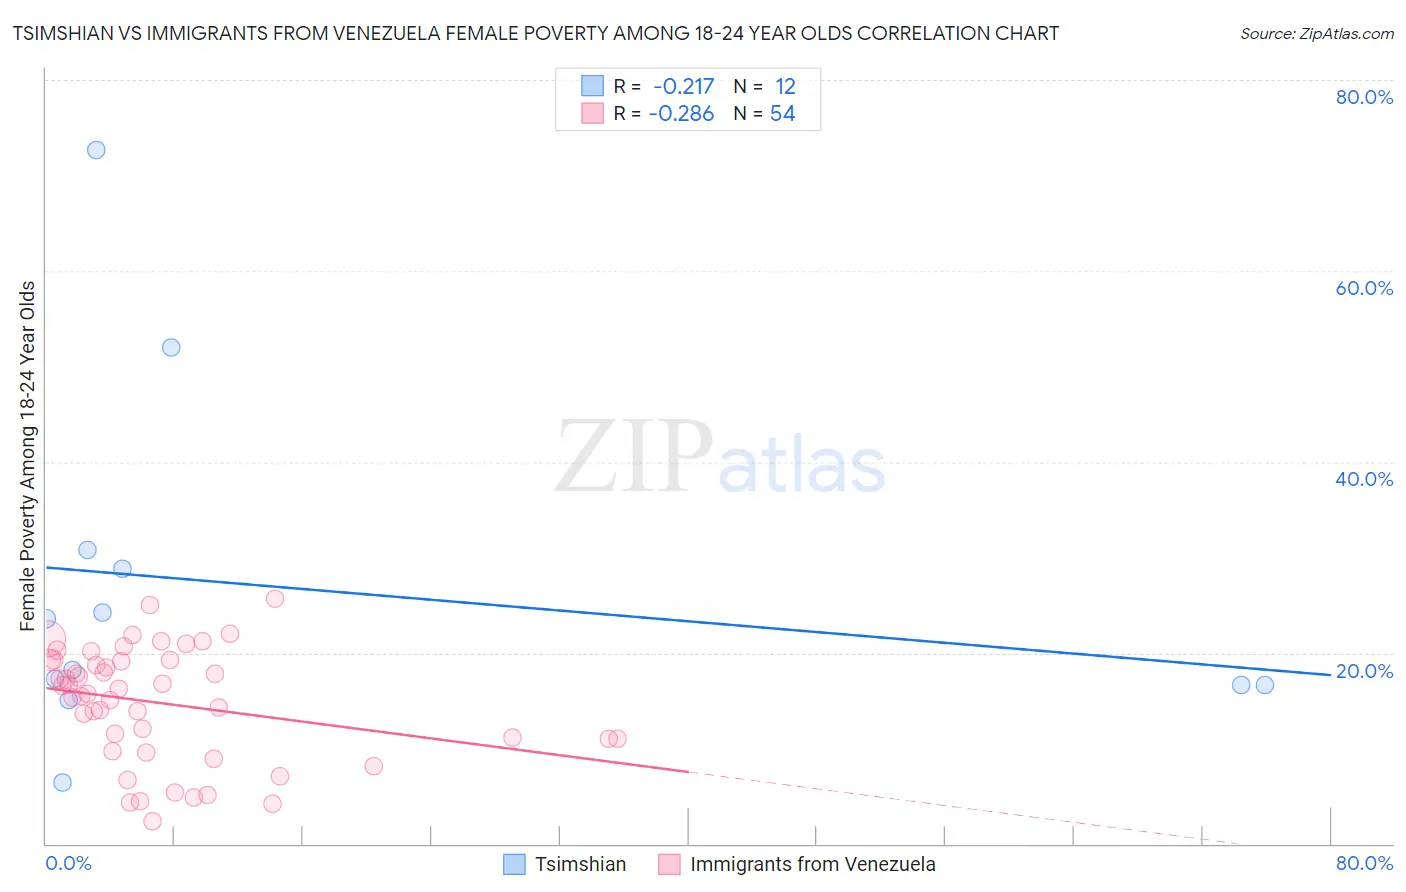 Tsimshian vs Immigrants from Venezuela Female Poverty Among 18-24 Year Olds